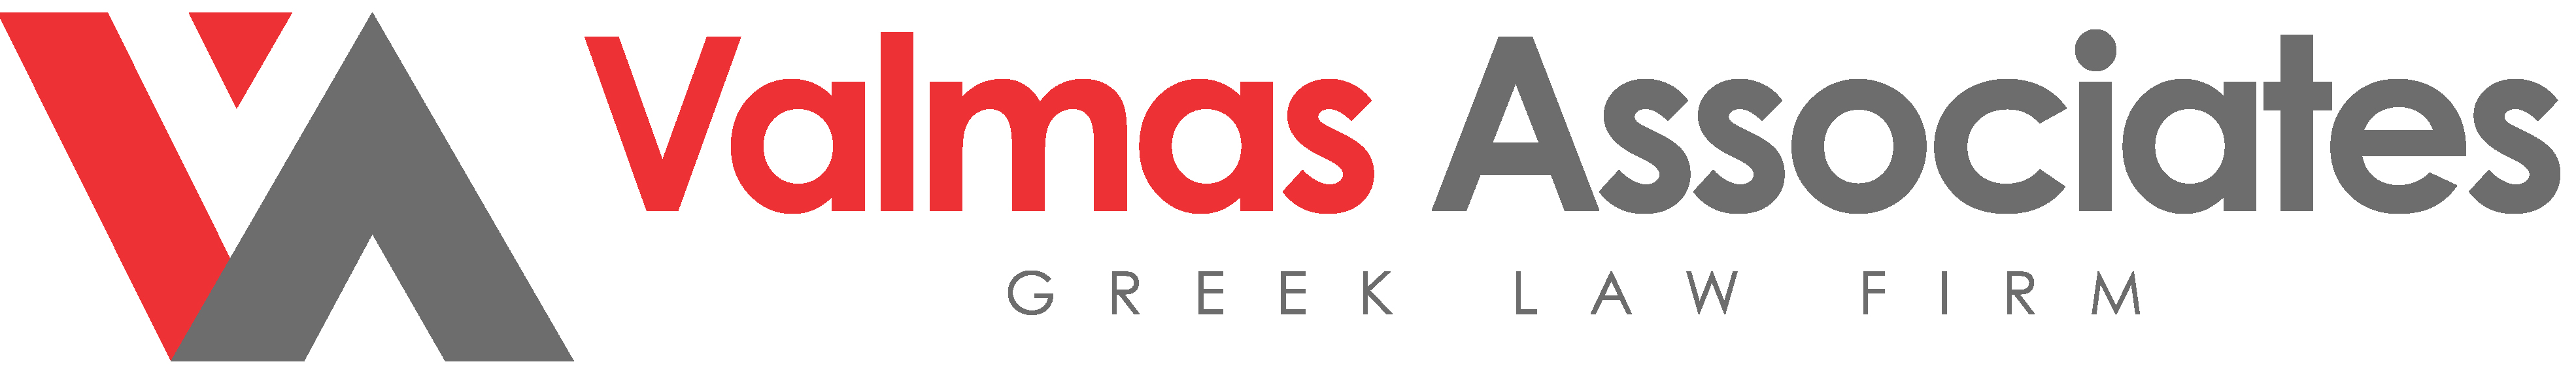 Valmas Associates - Greek Law Firm